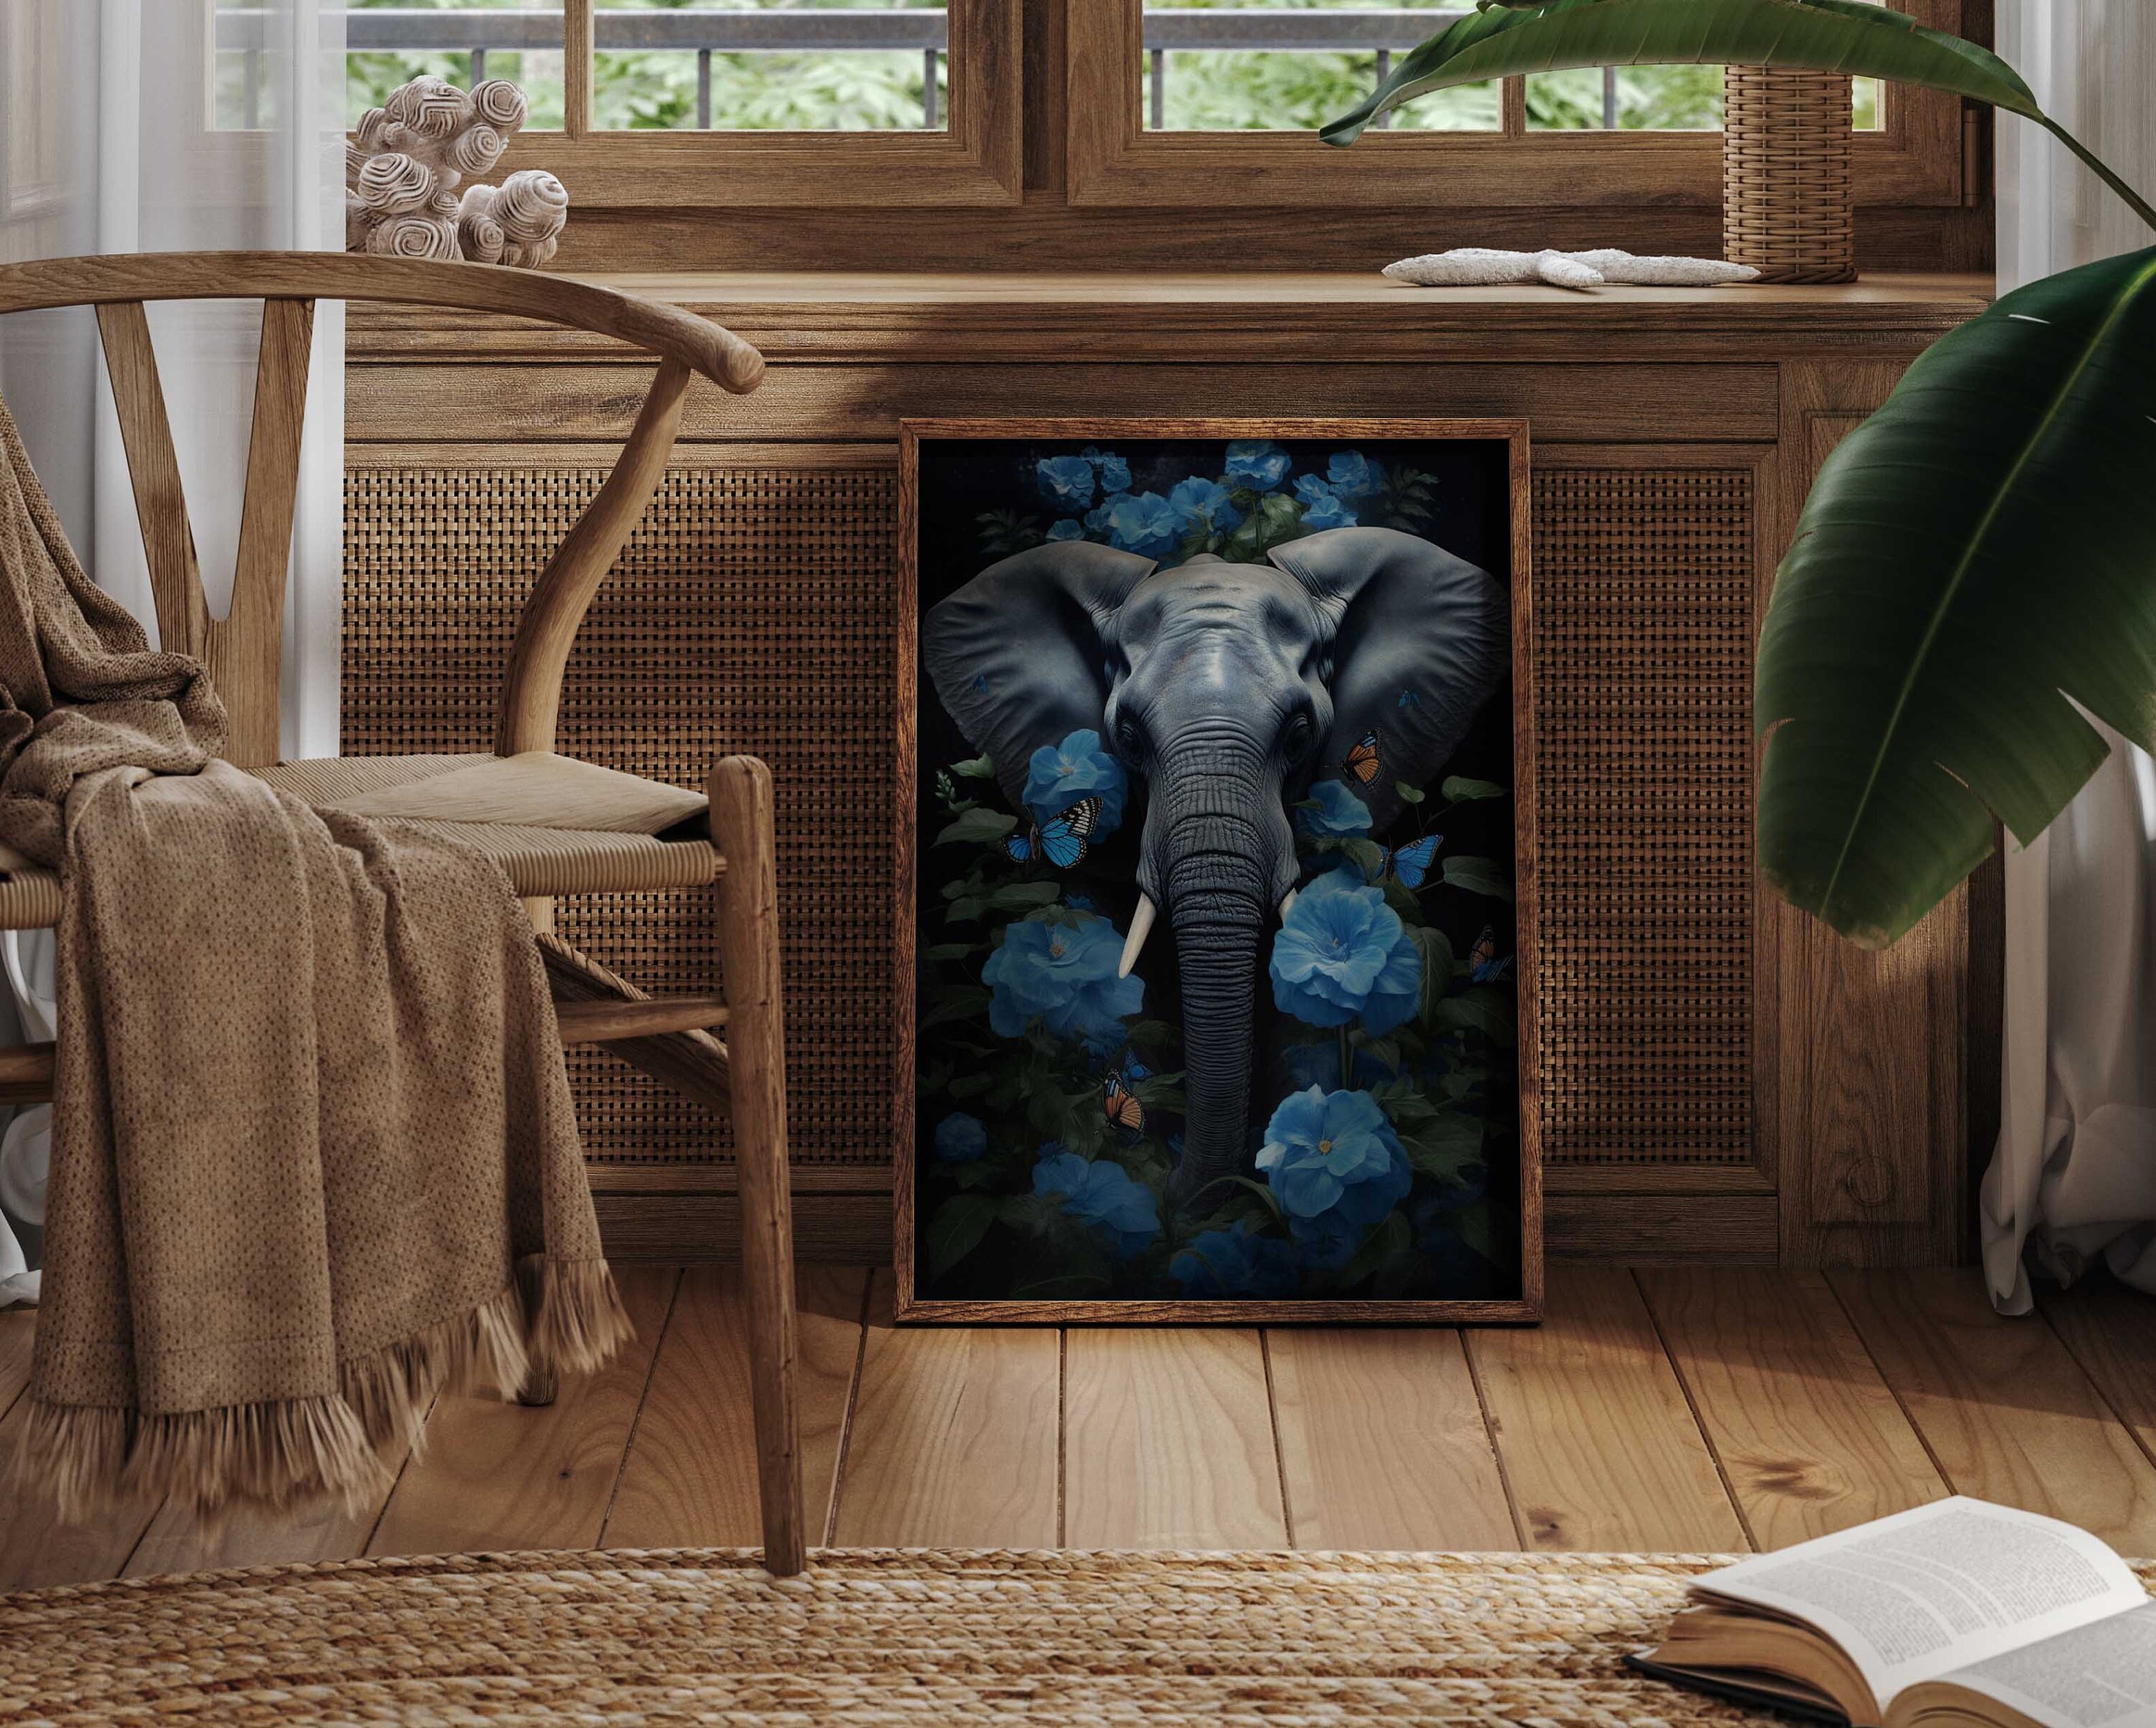 Elefant Portrait Mit Blauen Blumen Elephant / Animal Etsy AP3069 Art Premium - Poster Wandbild Wandbilder 